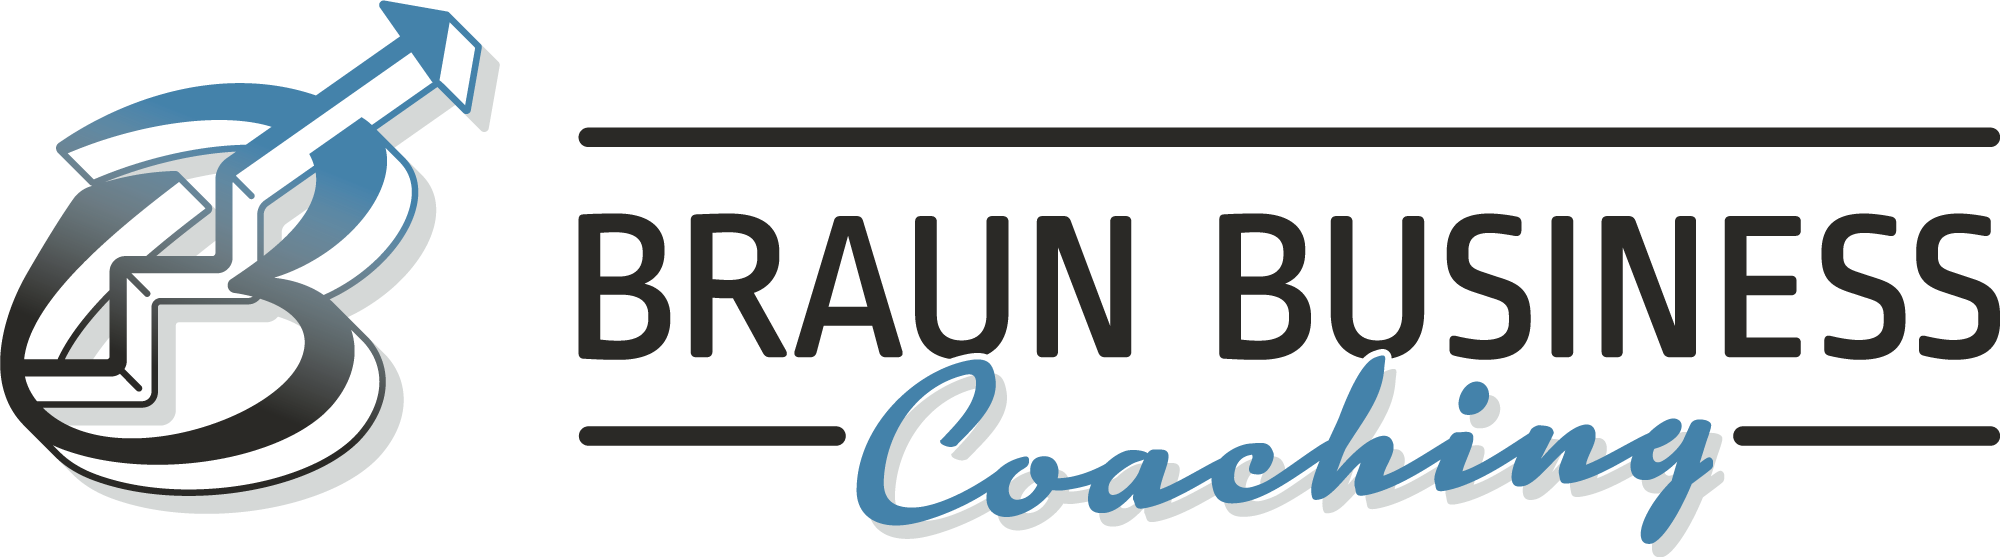 Braun Business Coaching